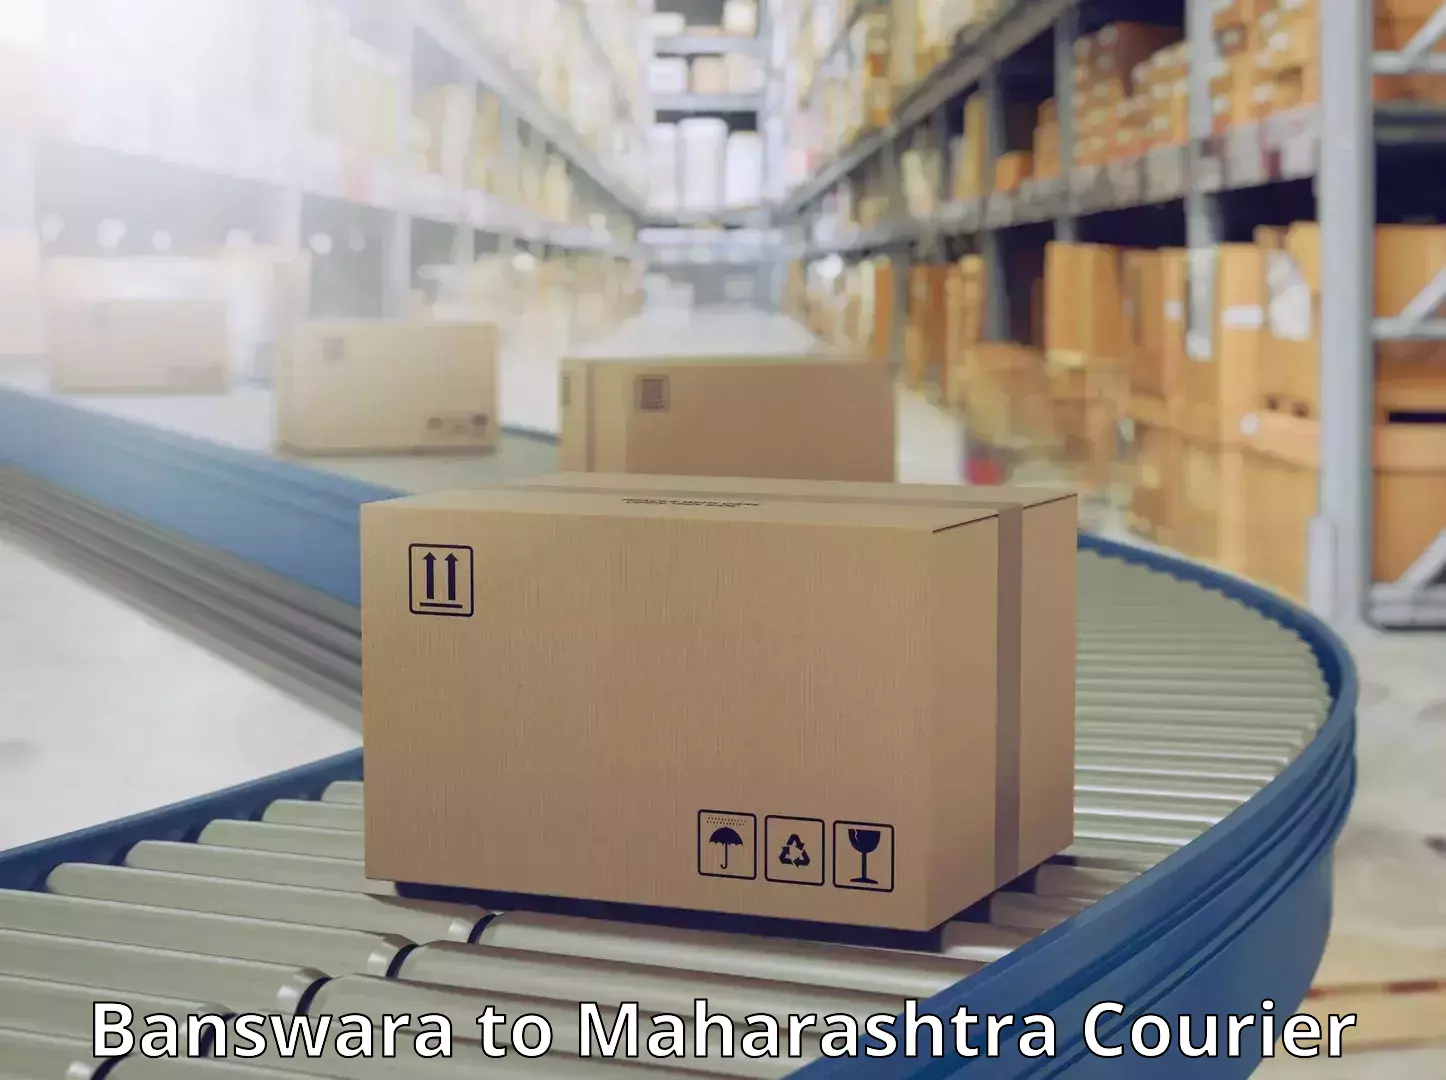 Modern courier technology Banswara to Aheri